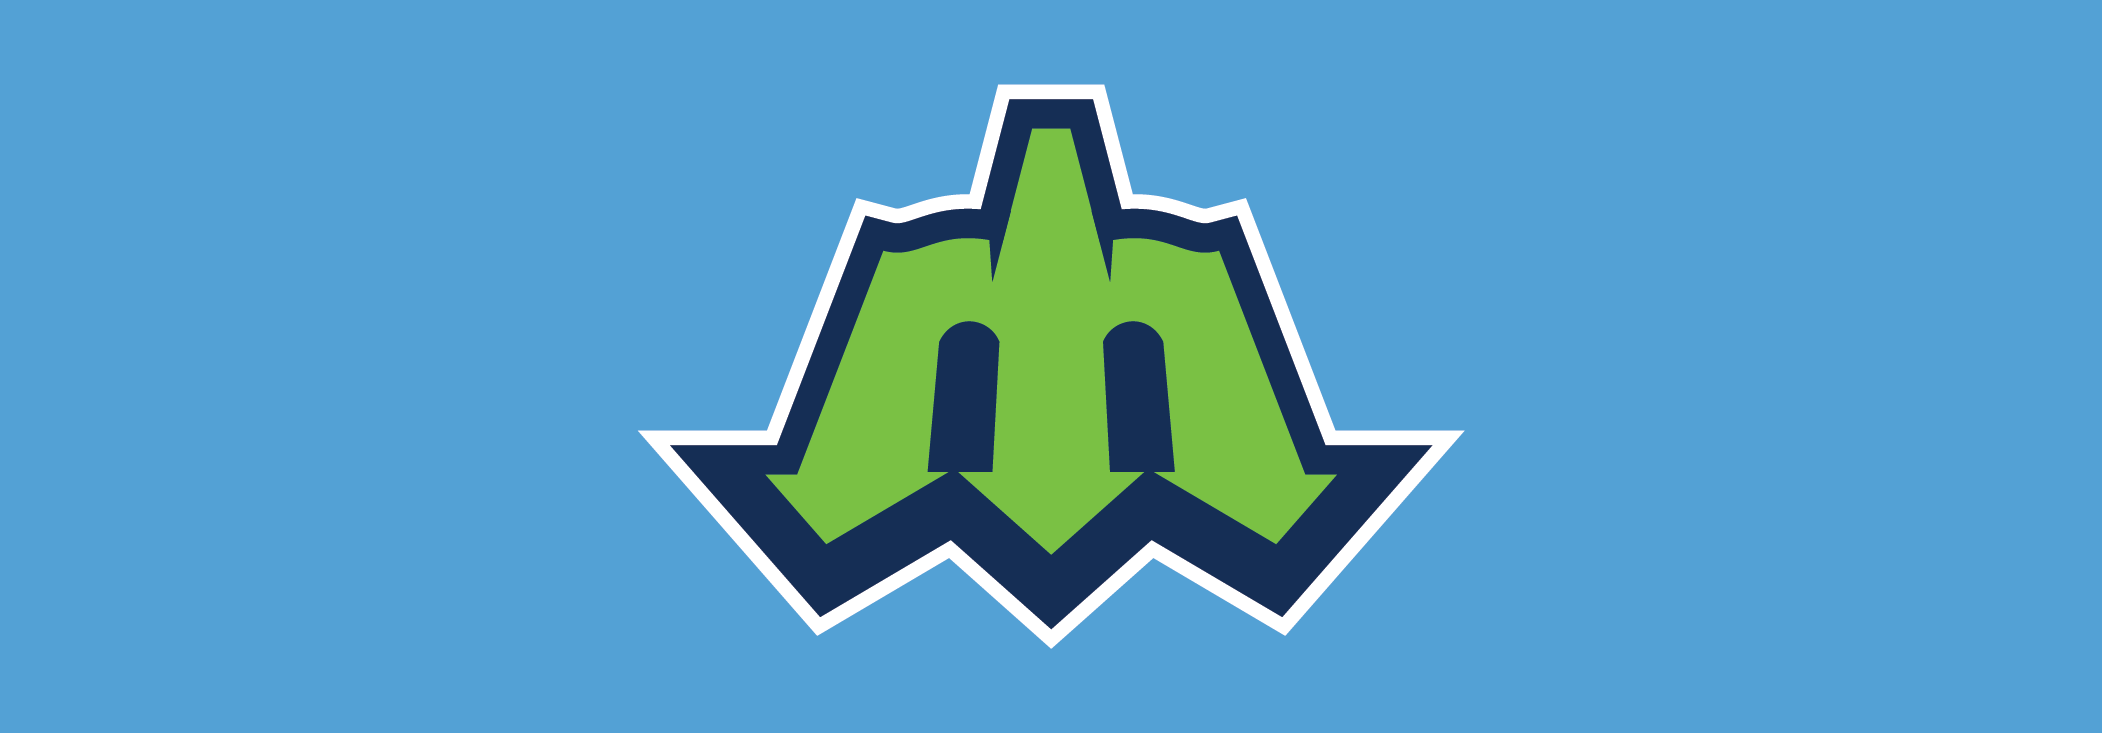 Mariners Trident Logo - Seattle Mariners Rebrand - Concepts - Chris Creamer's Sports Logos ...